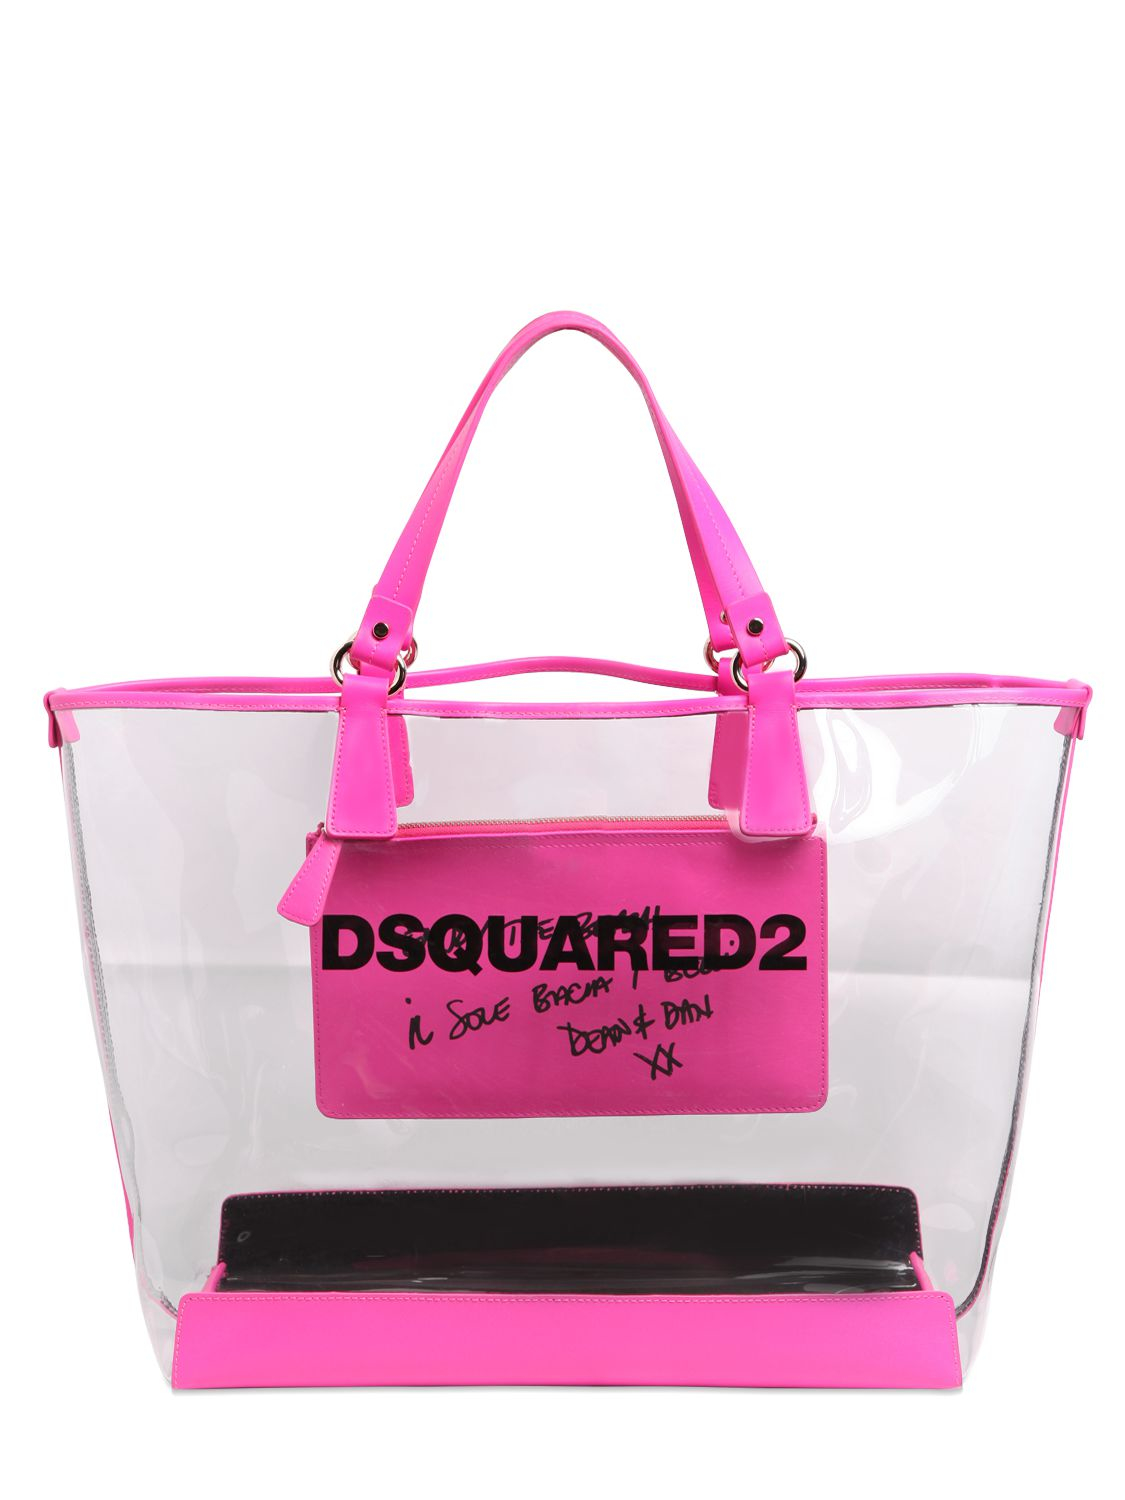 DSquared² Leather Logo Printed Pvc Beach Tote Bag in Fuchsia (Purple) - Lyst